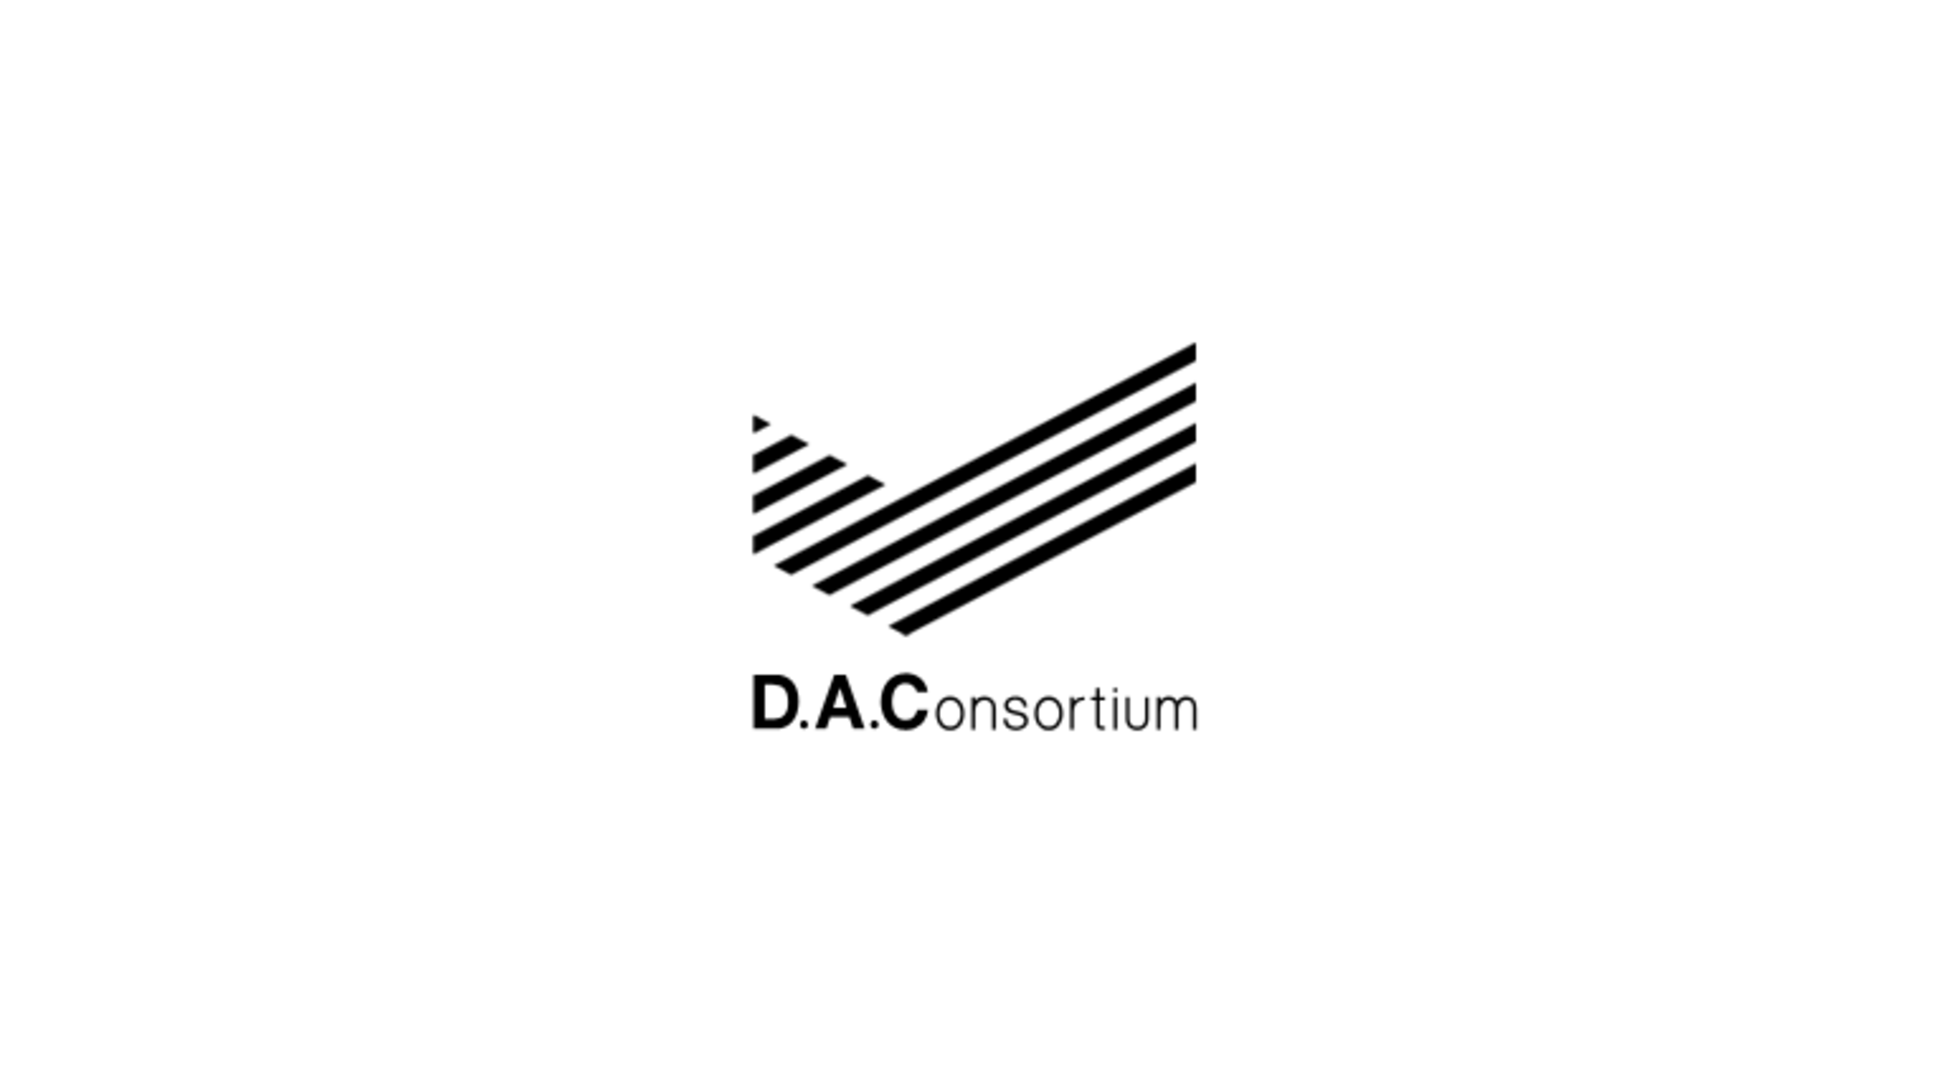 DAC、韓国のデジタルエージェンシーeMFORCEを連結子会社化